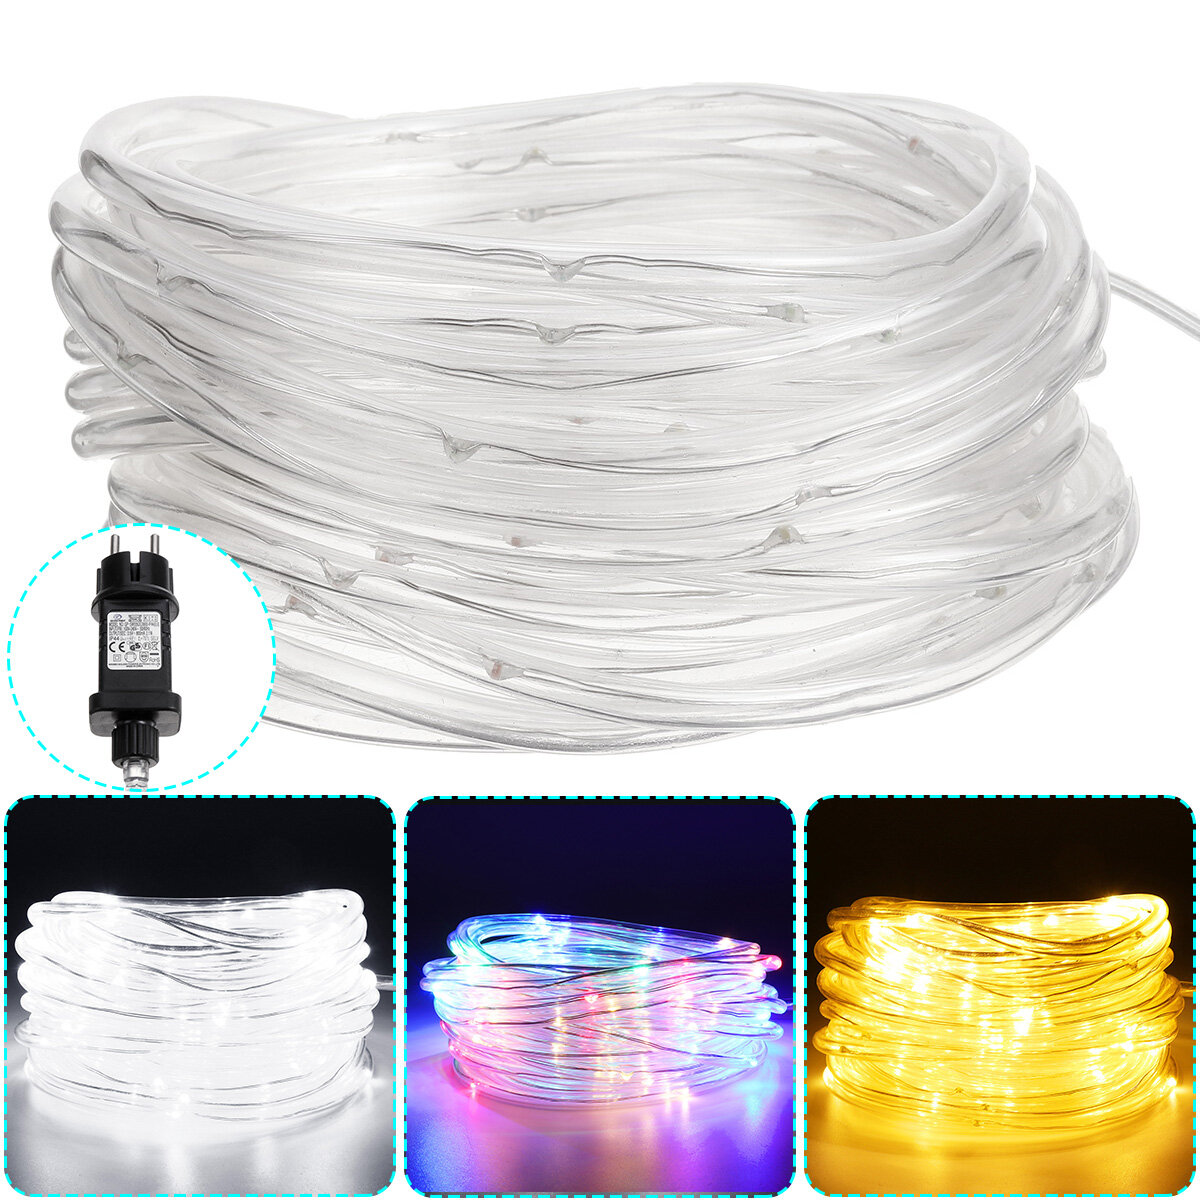 10M 100LED Outdoor Tube Rope Strip String Light RGB Lamp Xmas Home Decor Lights